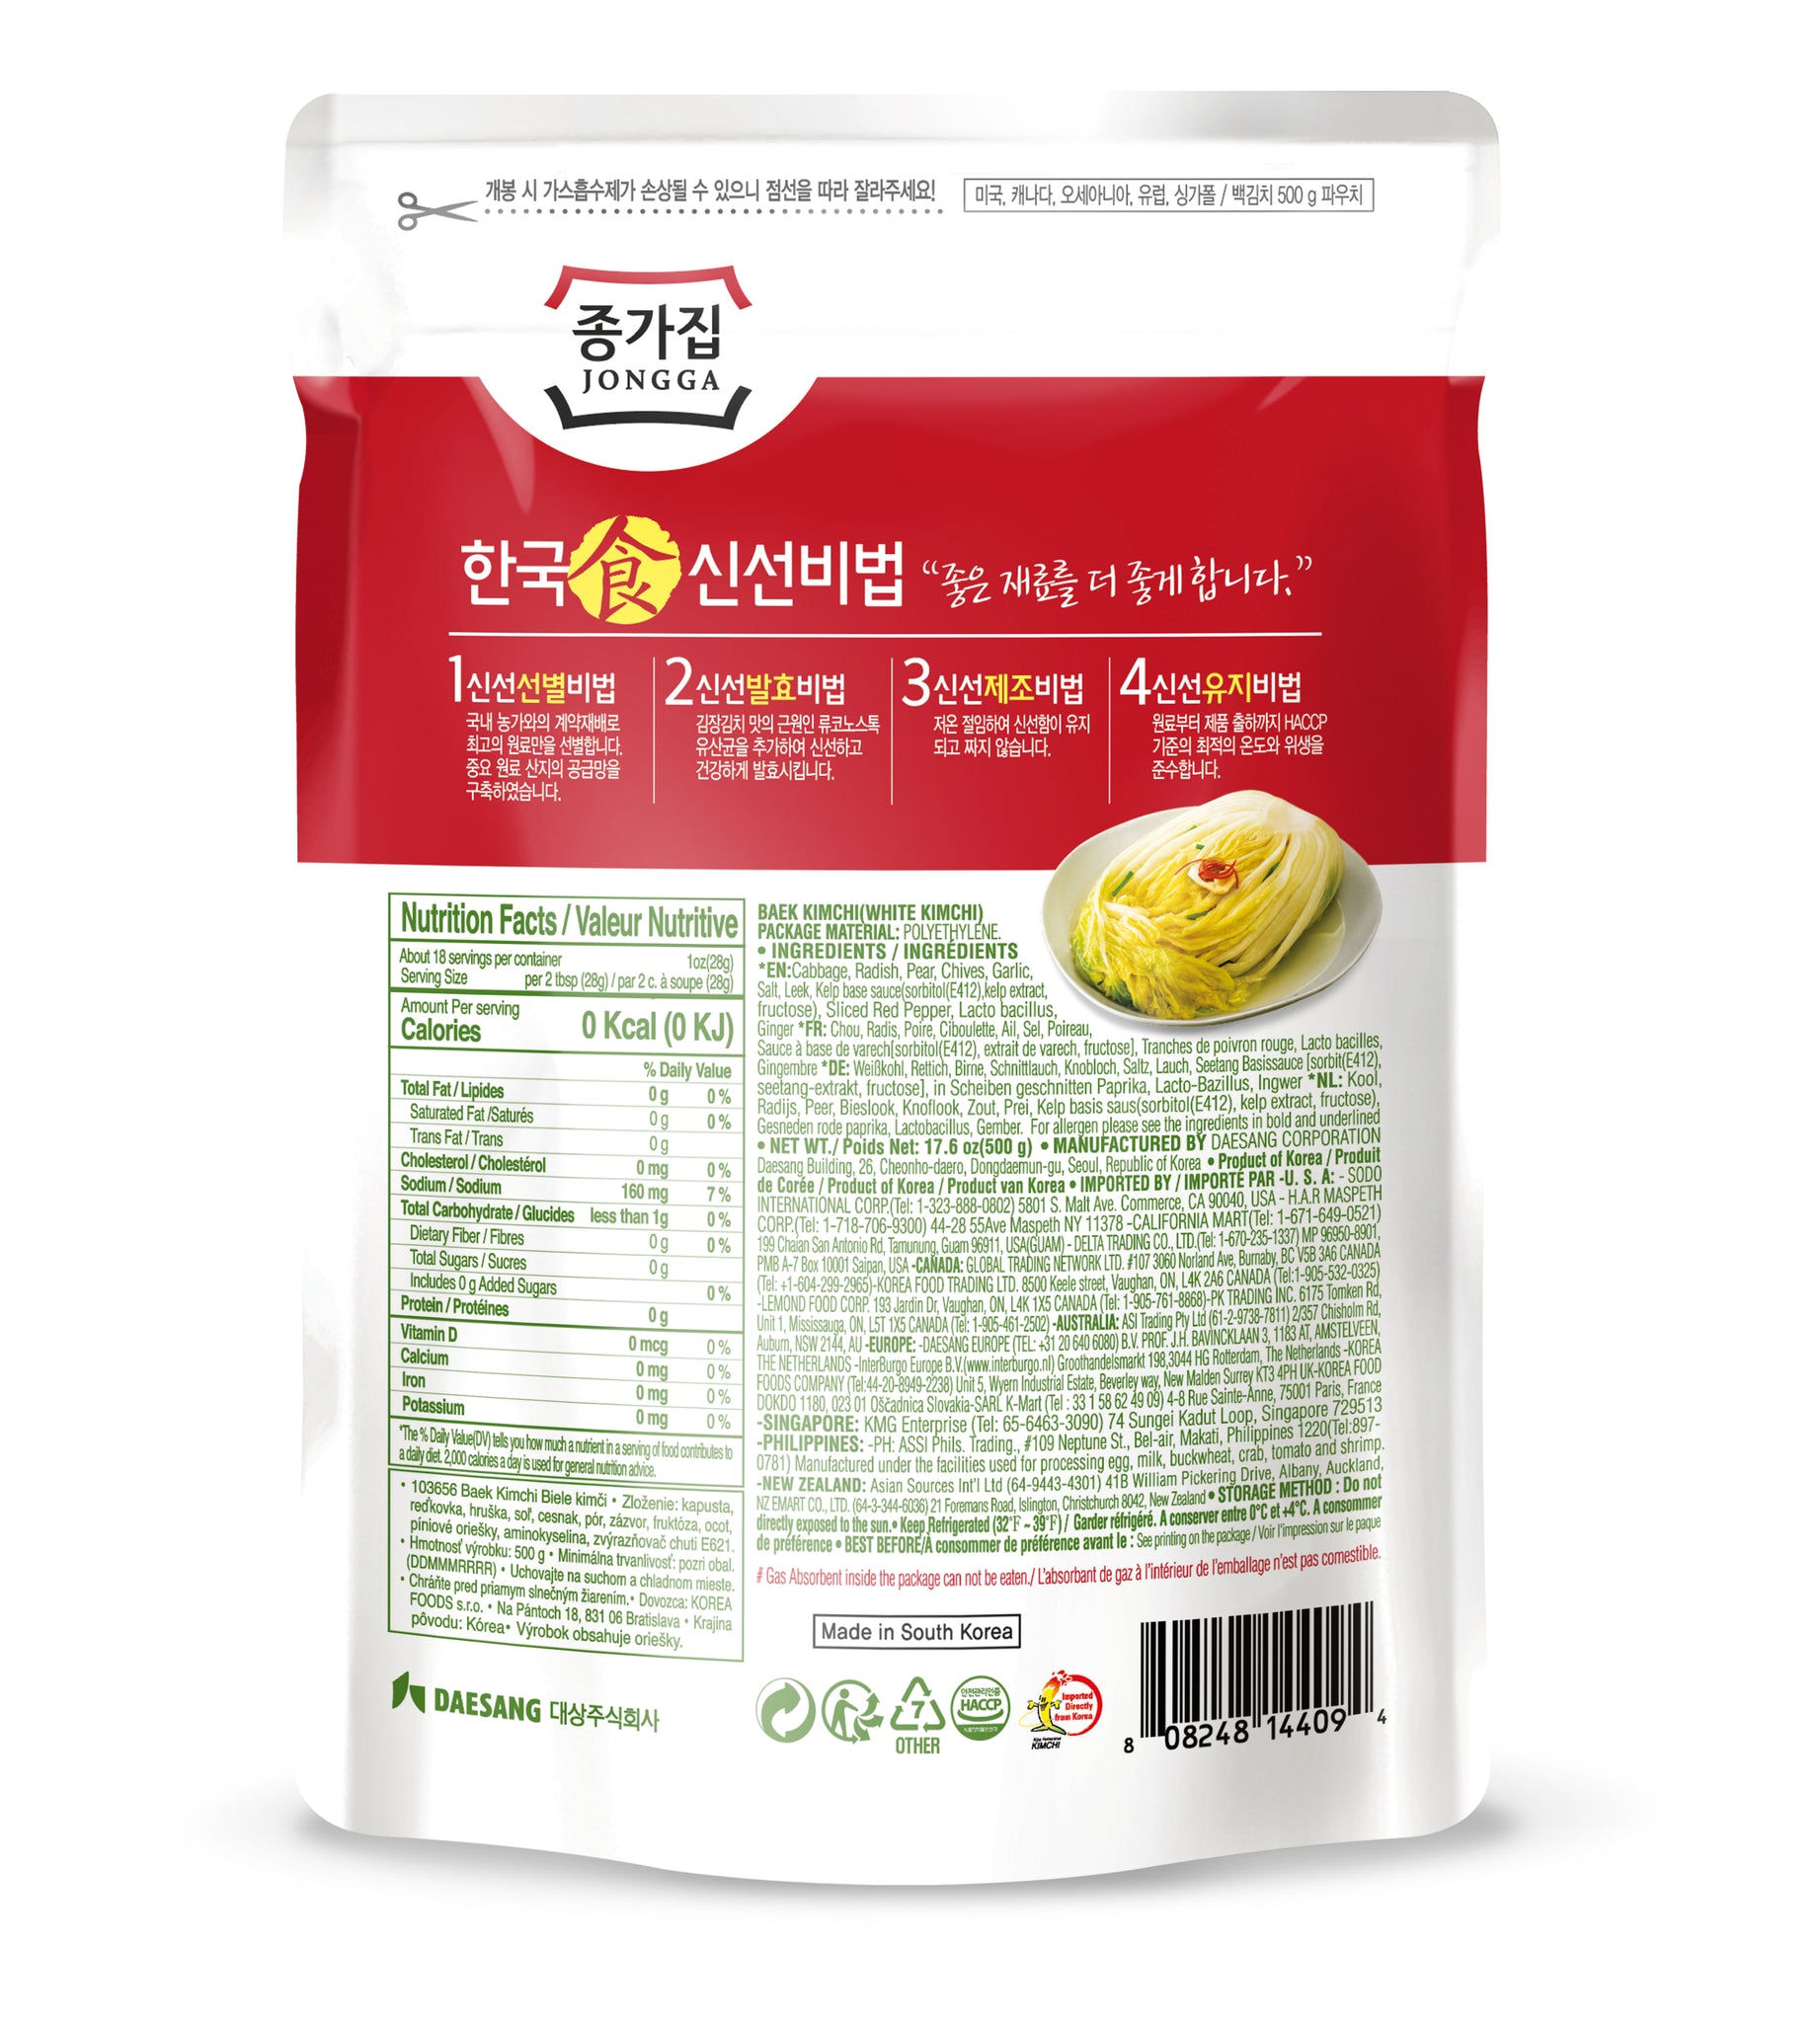 Jongga White Kimchi 종가 백김치 500g (1.1 LBS)